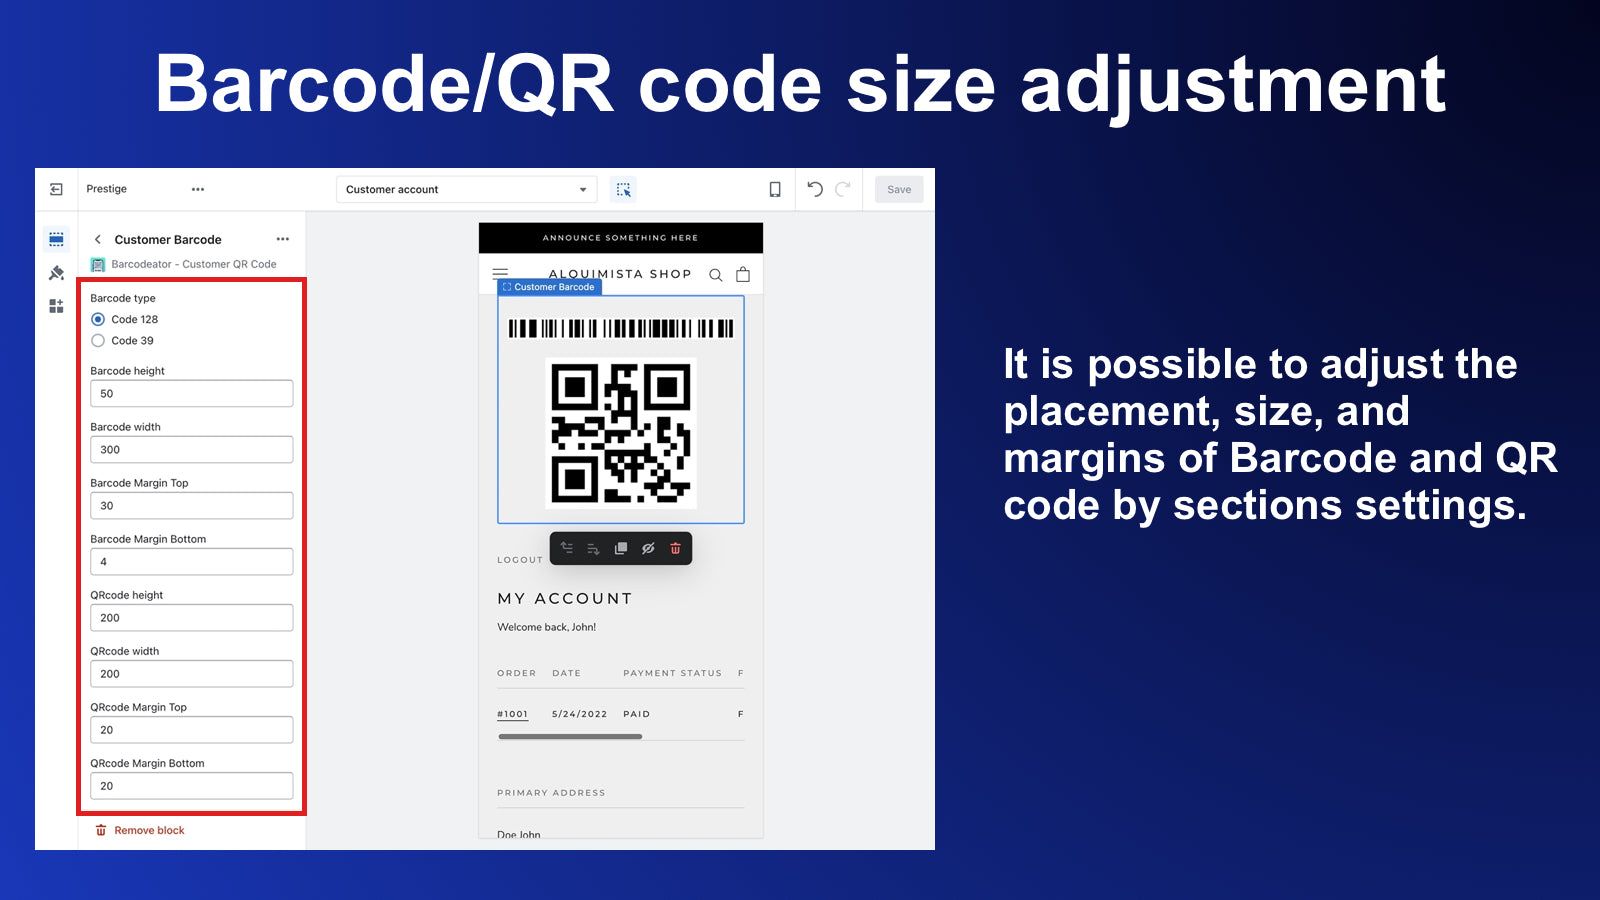 Barcode/QR code size adjustment